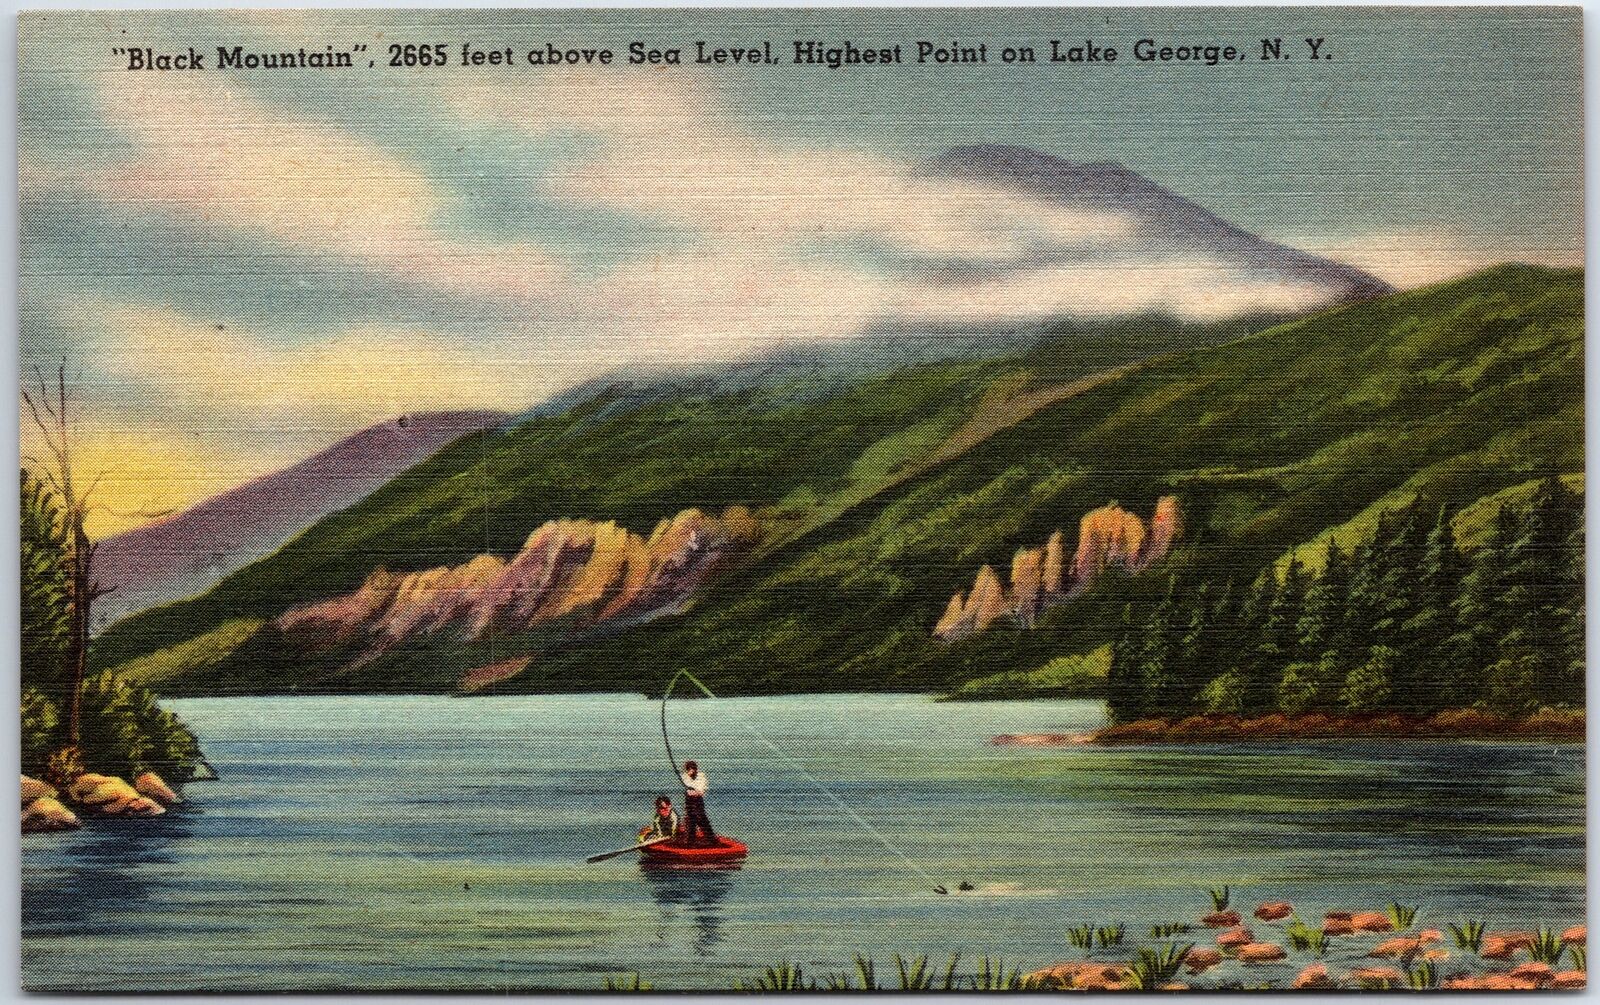 VINTAGE POSTCARD FISHING AT BLACK MOUNTAIN LAKE GEORGE NEW YORK 1930s/1940s